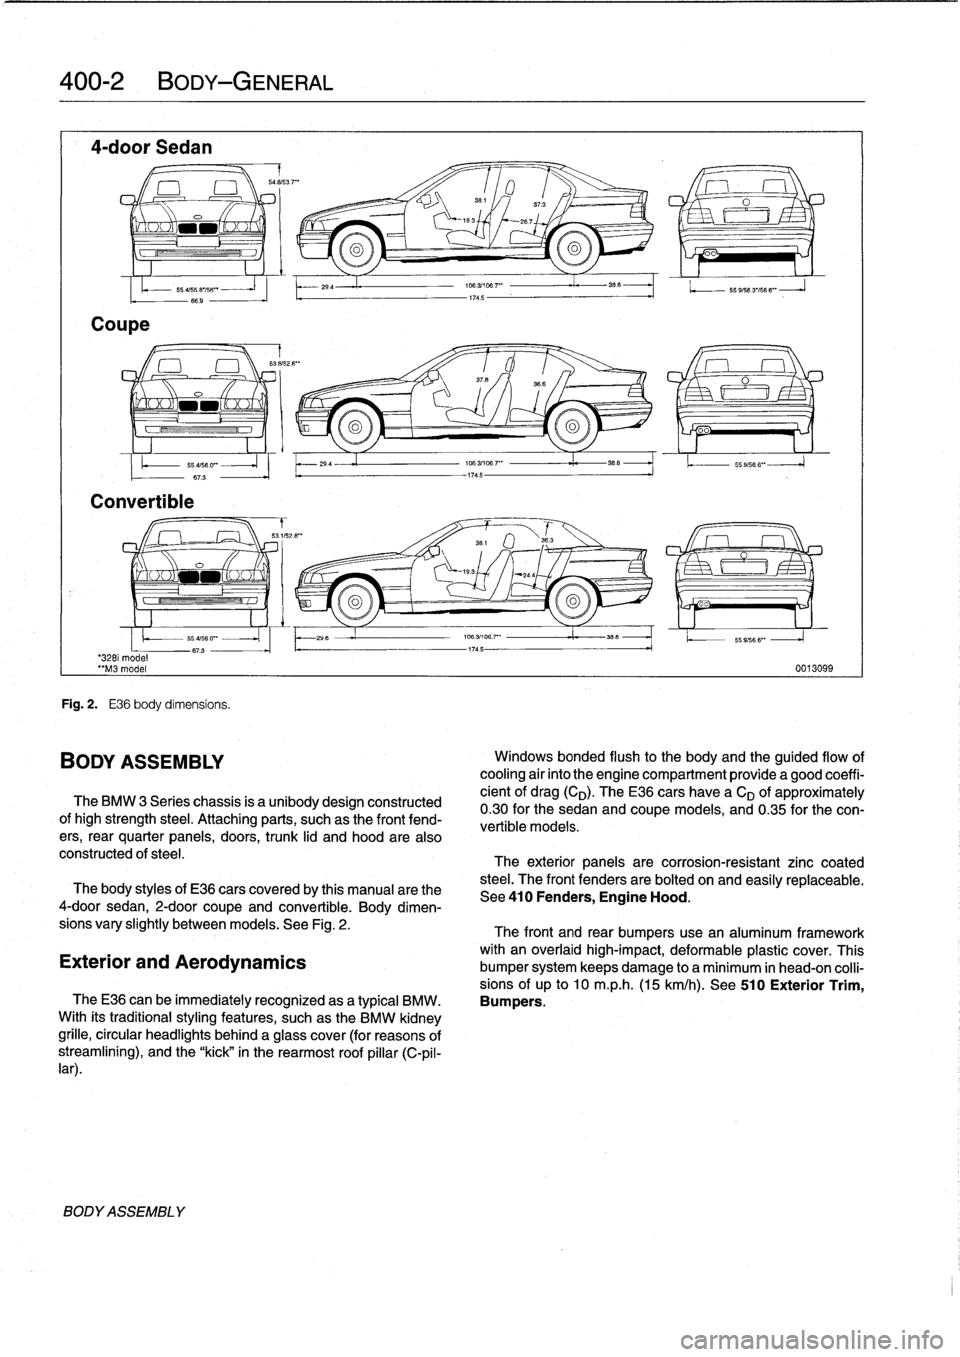 BMW 325i 1994 E36 Workshop Manual 
400-2
BODY-GENERAL

4-door
Sedan

Coupe

-
saas3
.7""

351
/

	

37
.3
O

	

I
x
`-193

	

267

o
oa

3281
model
"M3
model

Convertible

BODYASSEMBLY

55
ass
.e
iss
""
-
66
.9
-

Fig
.
2
.

	

E36
b